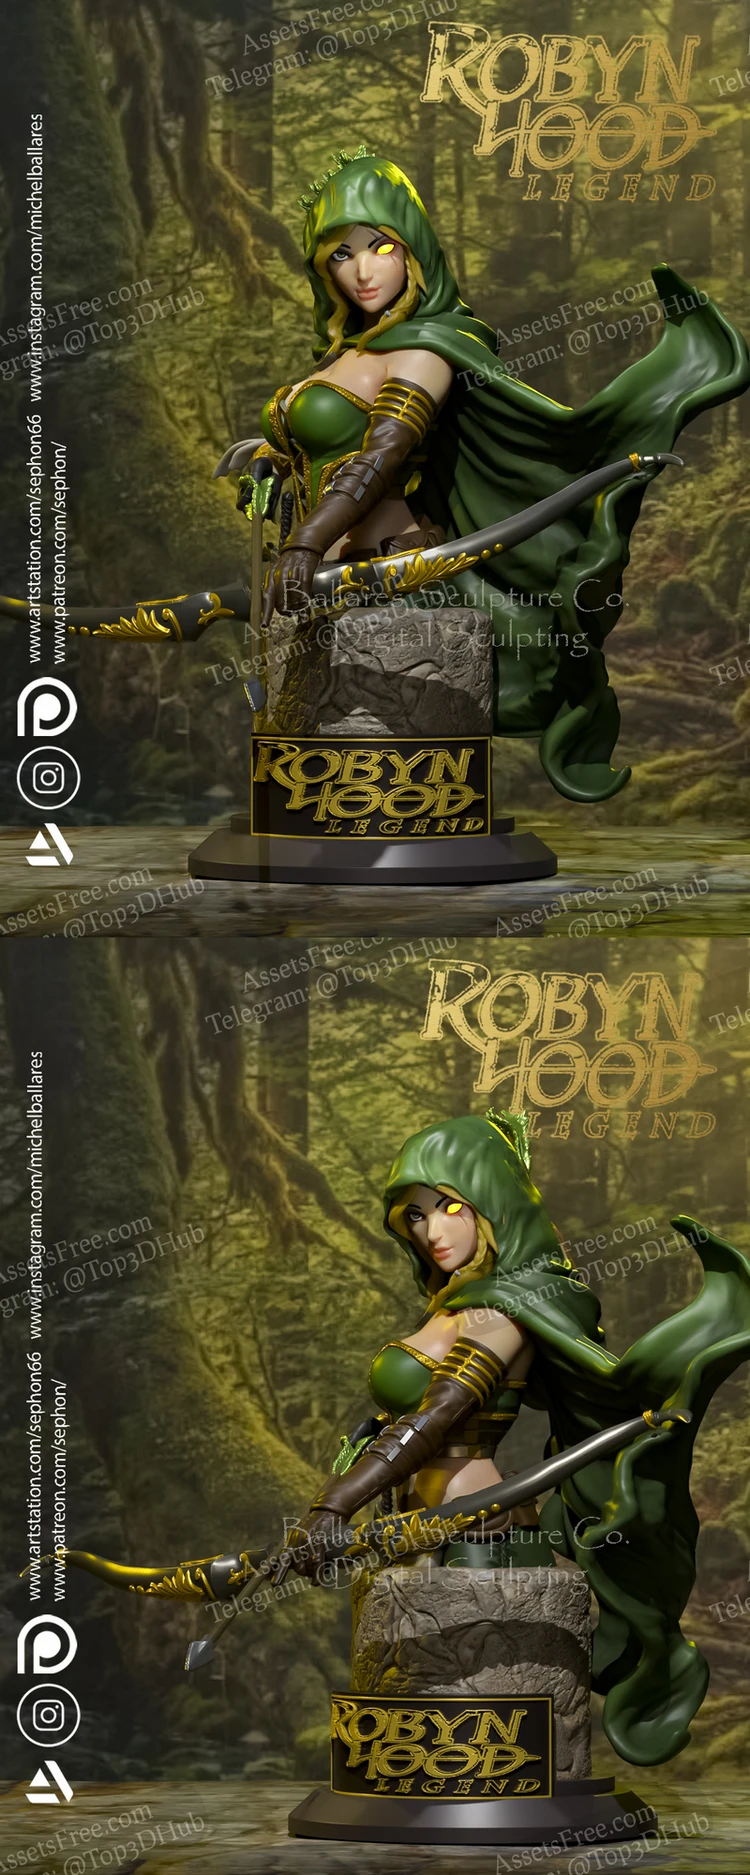 Robin Hood Legend